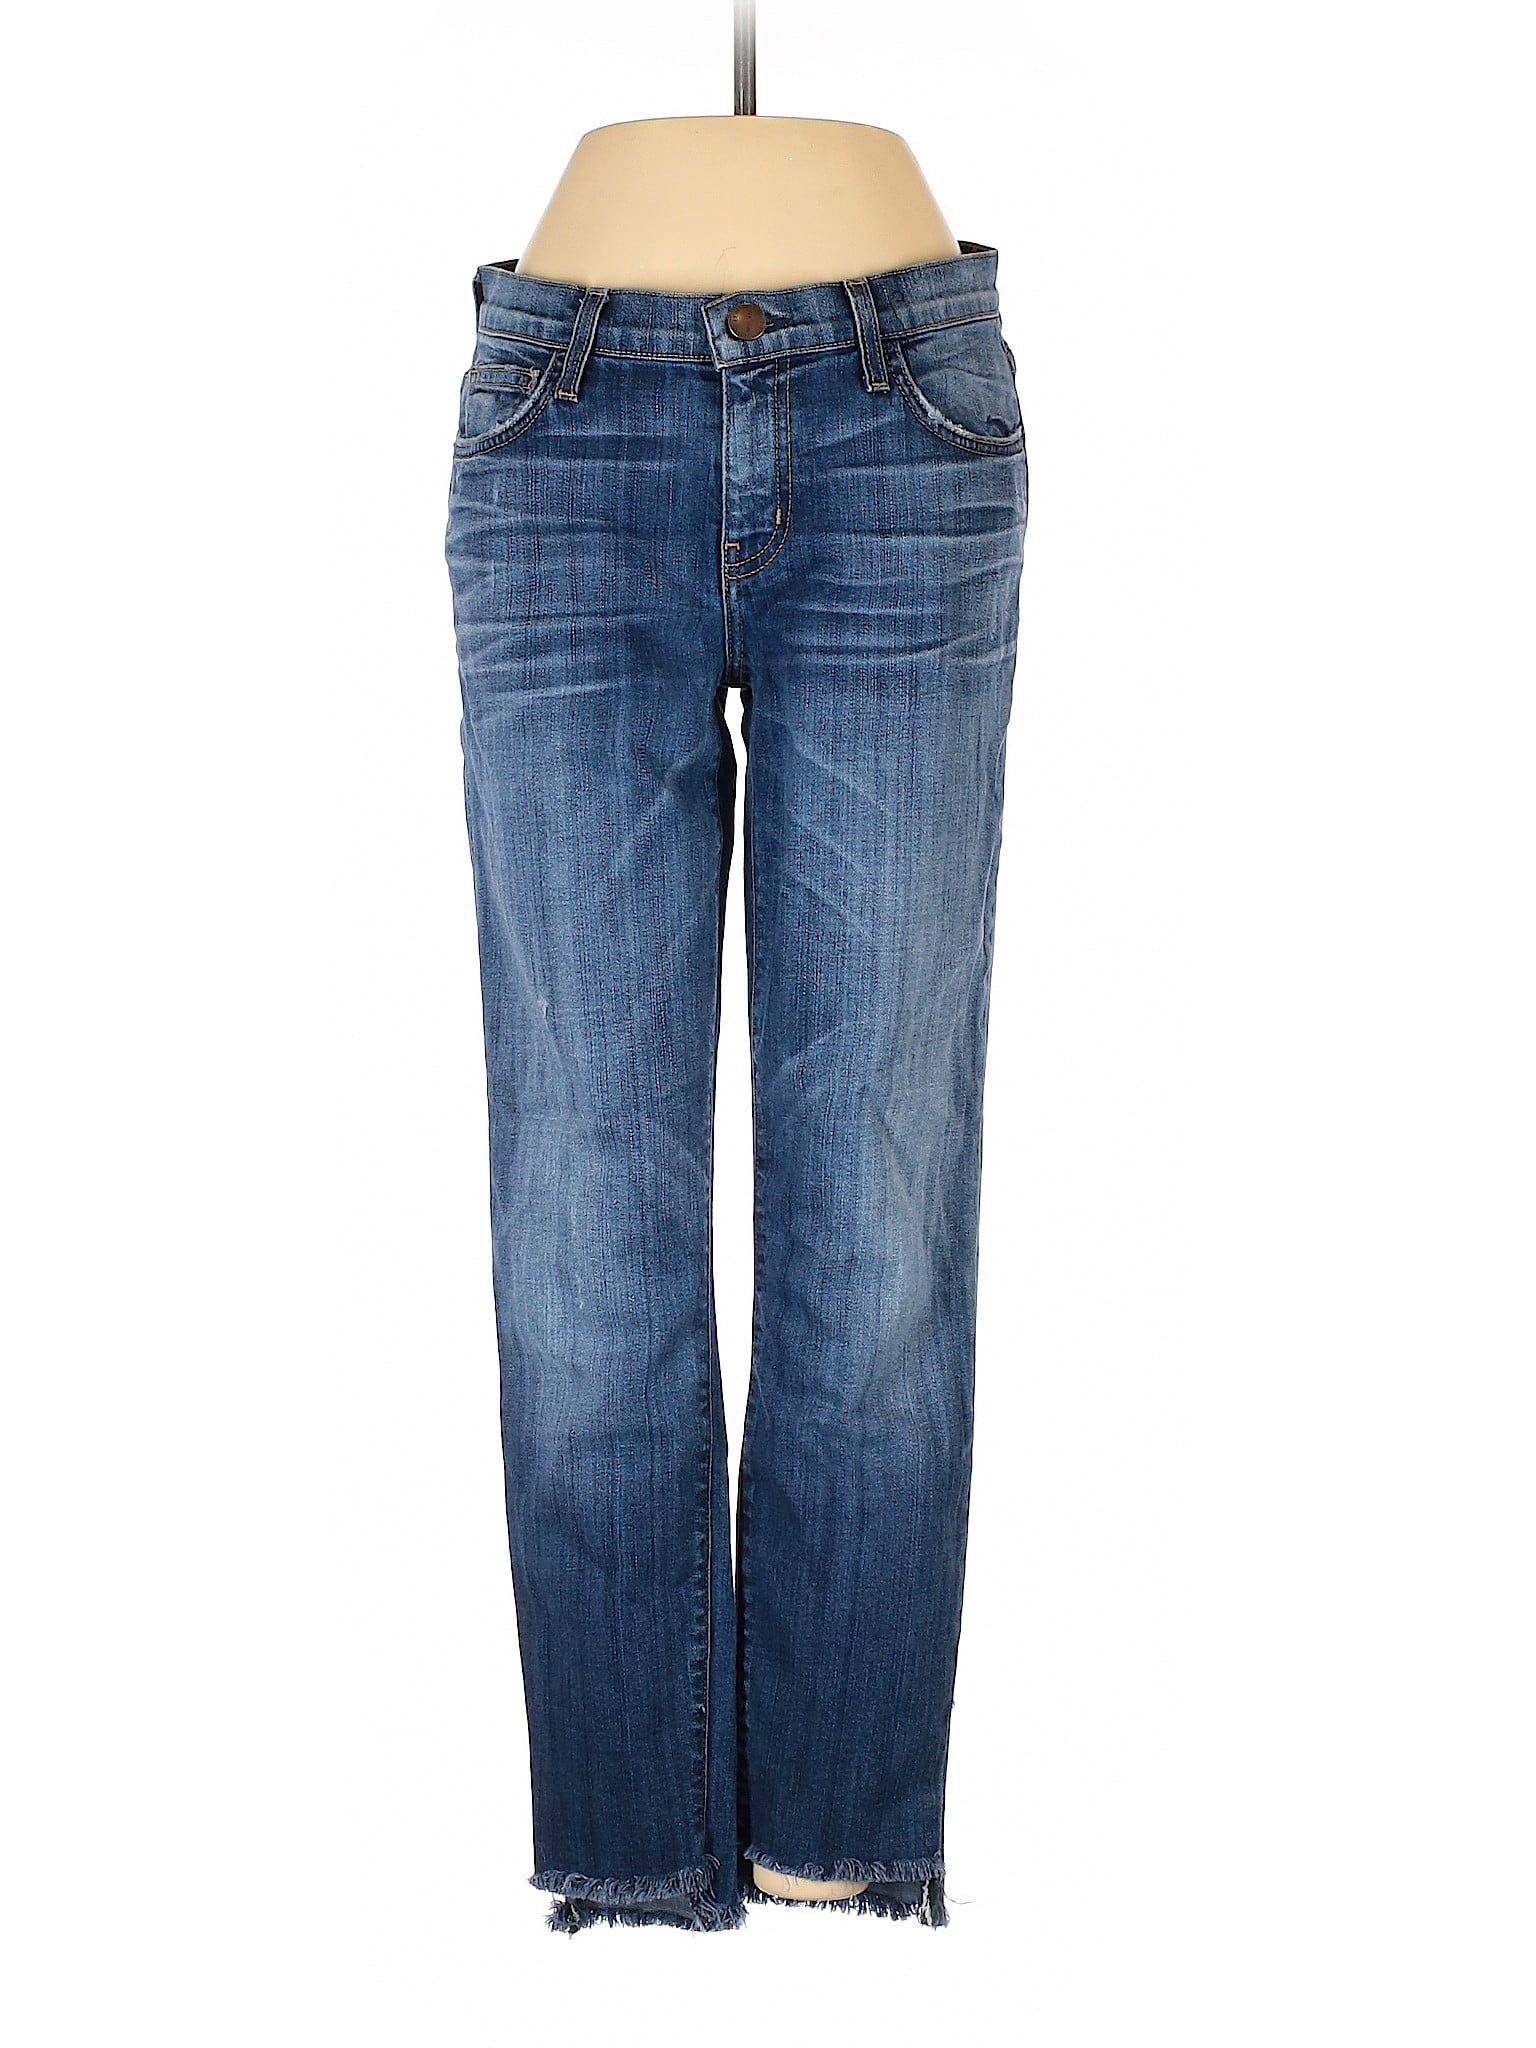 Current/Elliott - Pre-Owned Current/Elliott Women's Size 27W Jeans ...